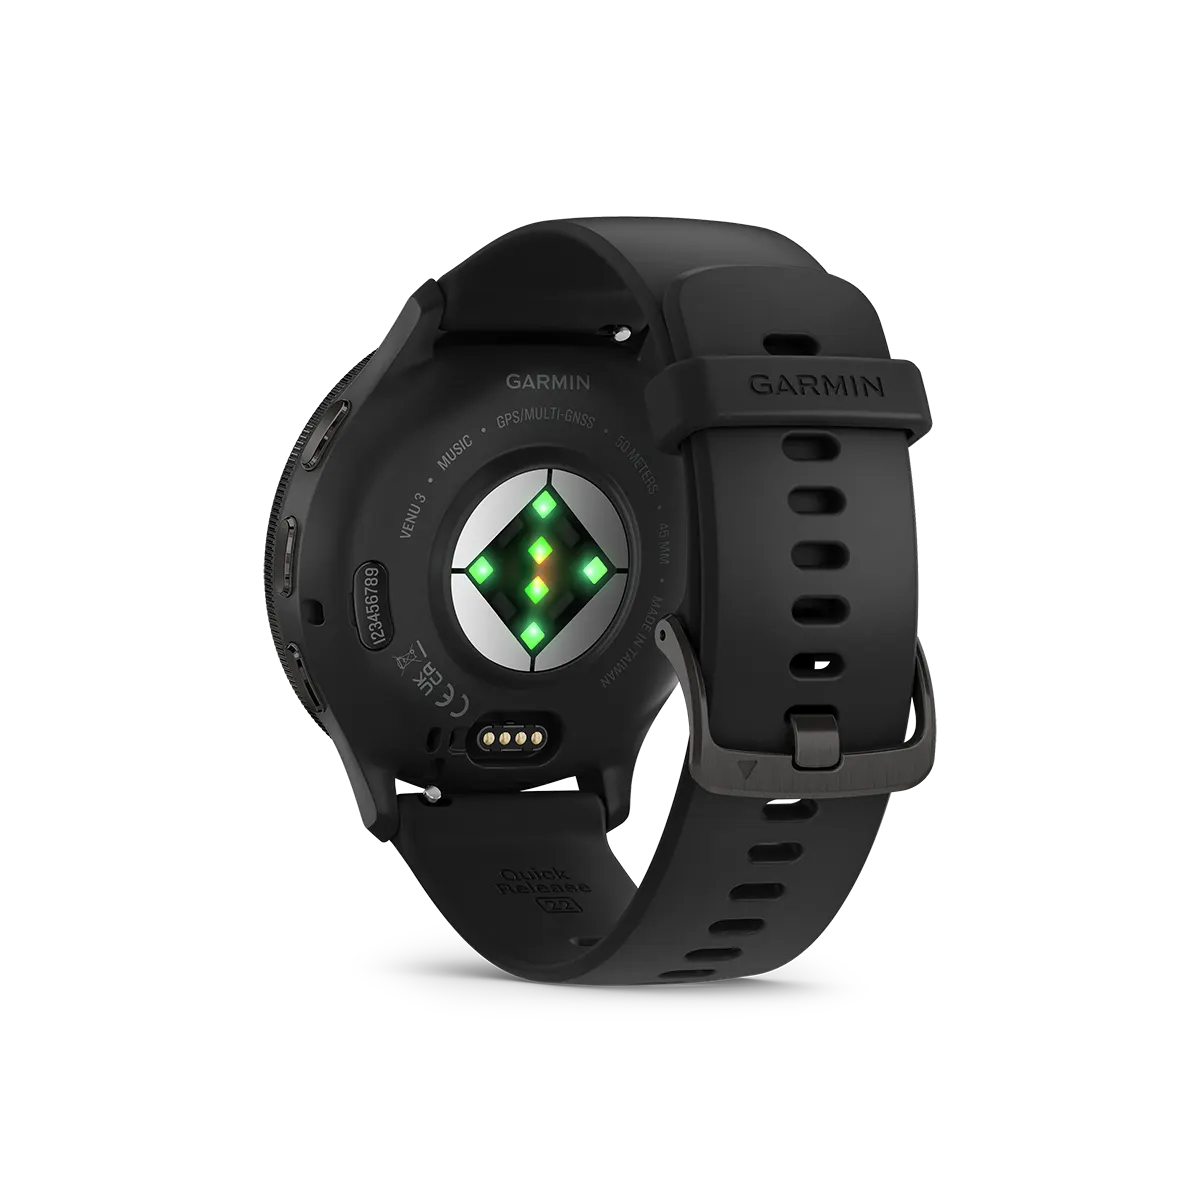 Garmin Venu 3 GPS Golf Watch Review